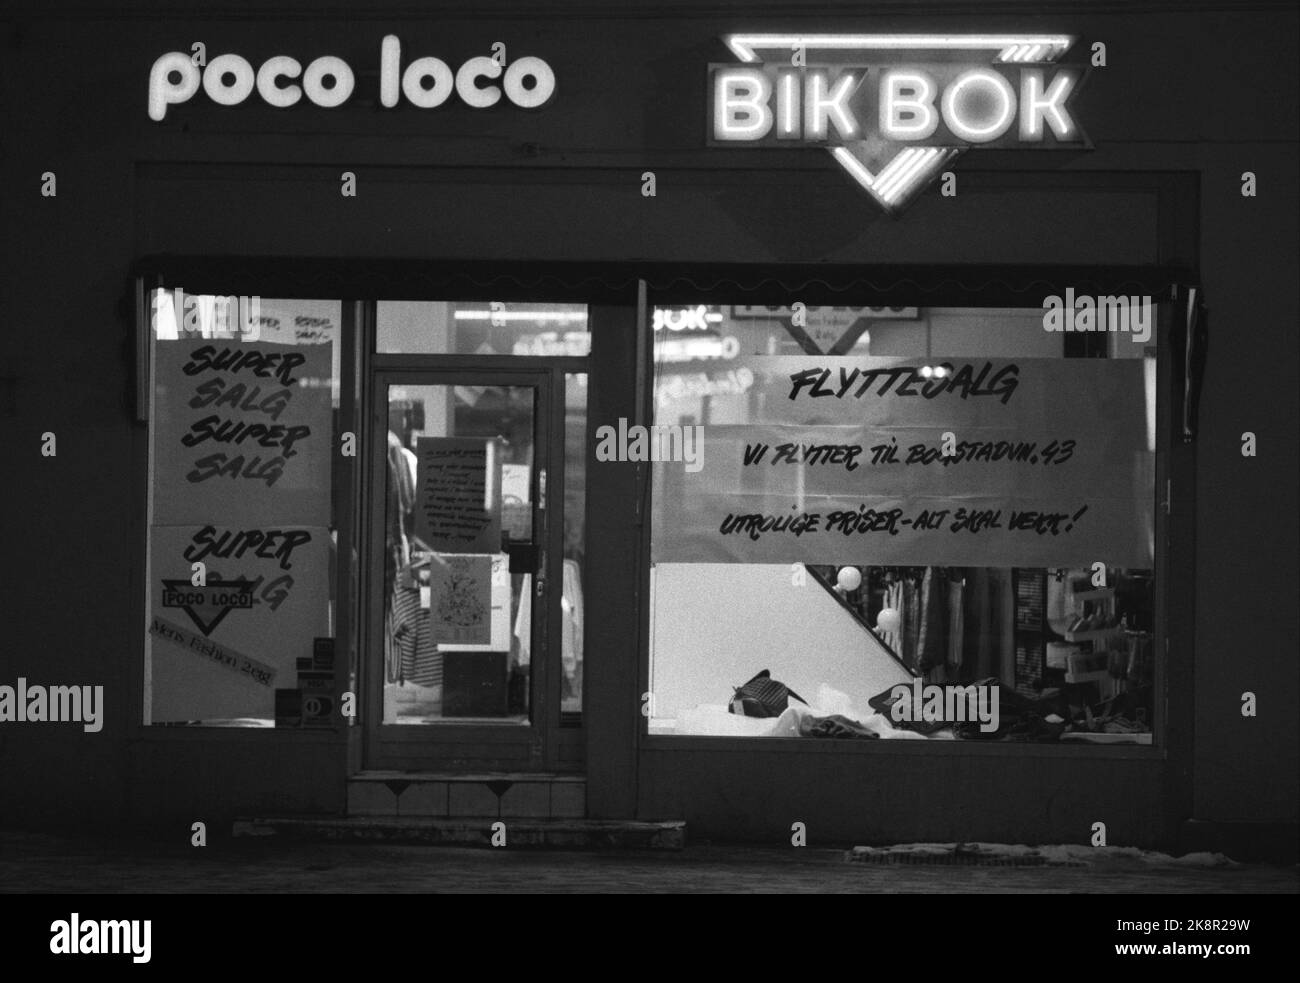 Bik bok oslo hi-res stock photography and images - Alamy